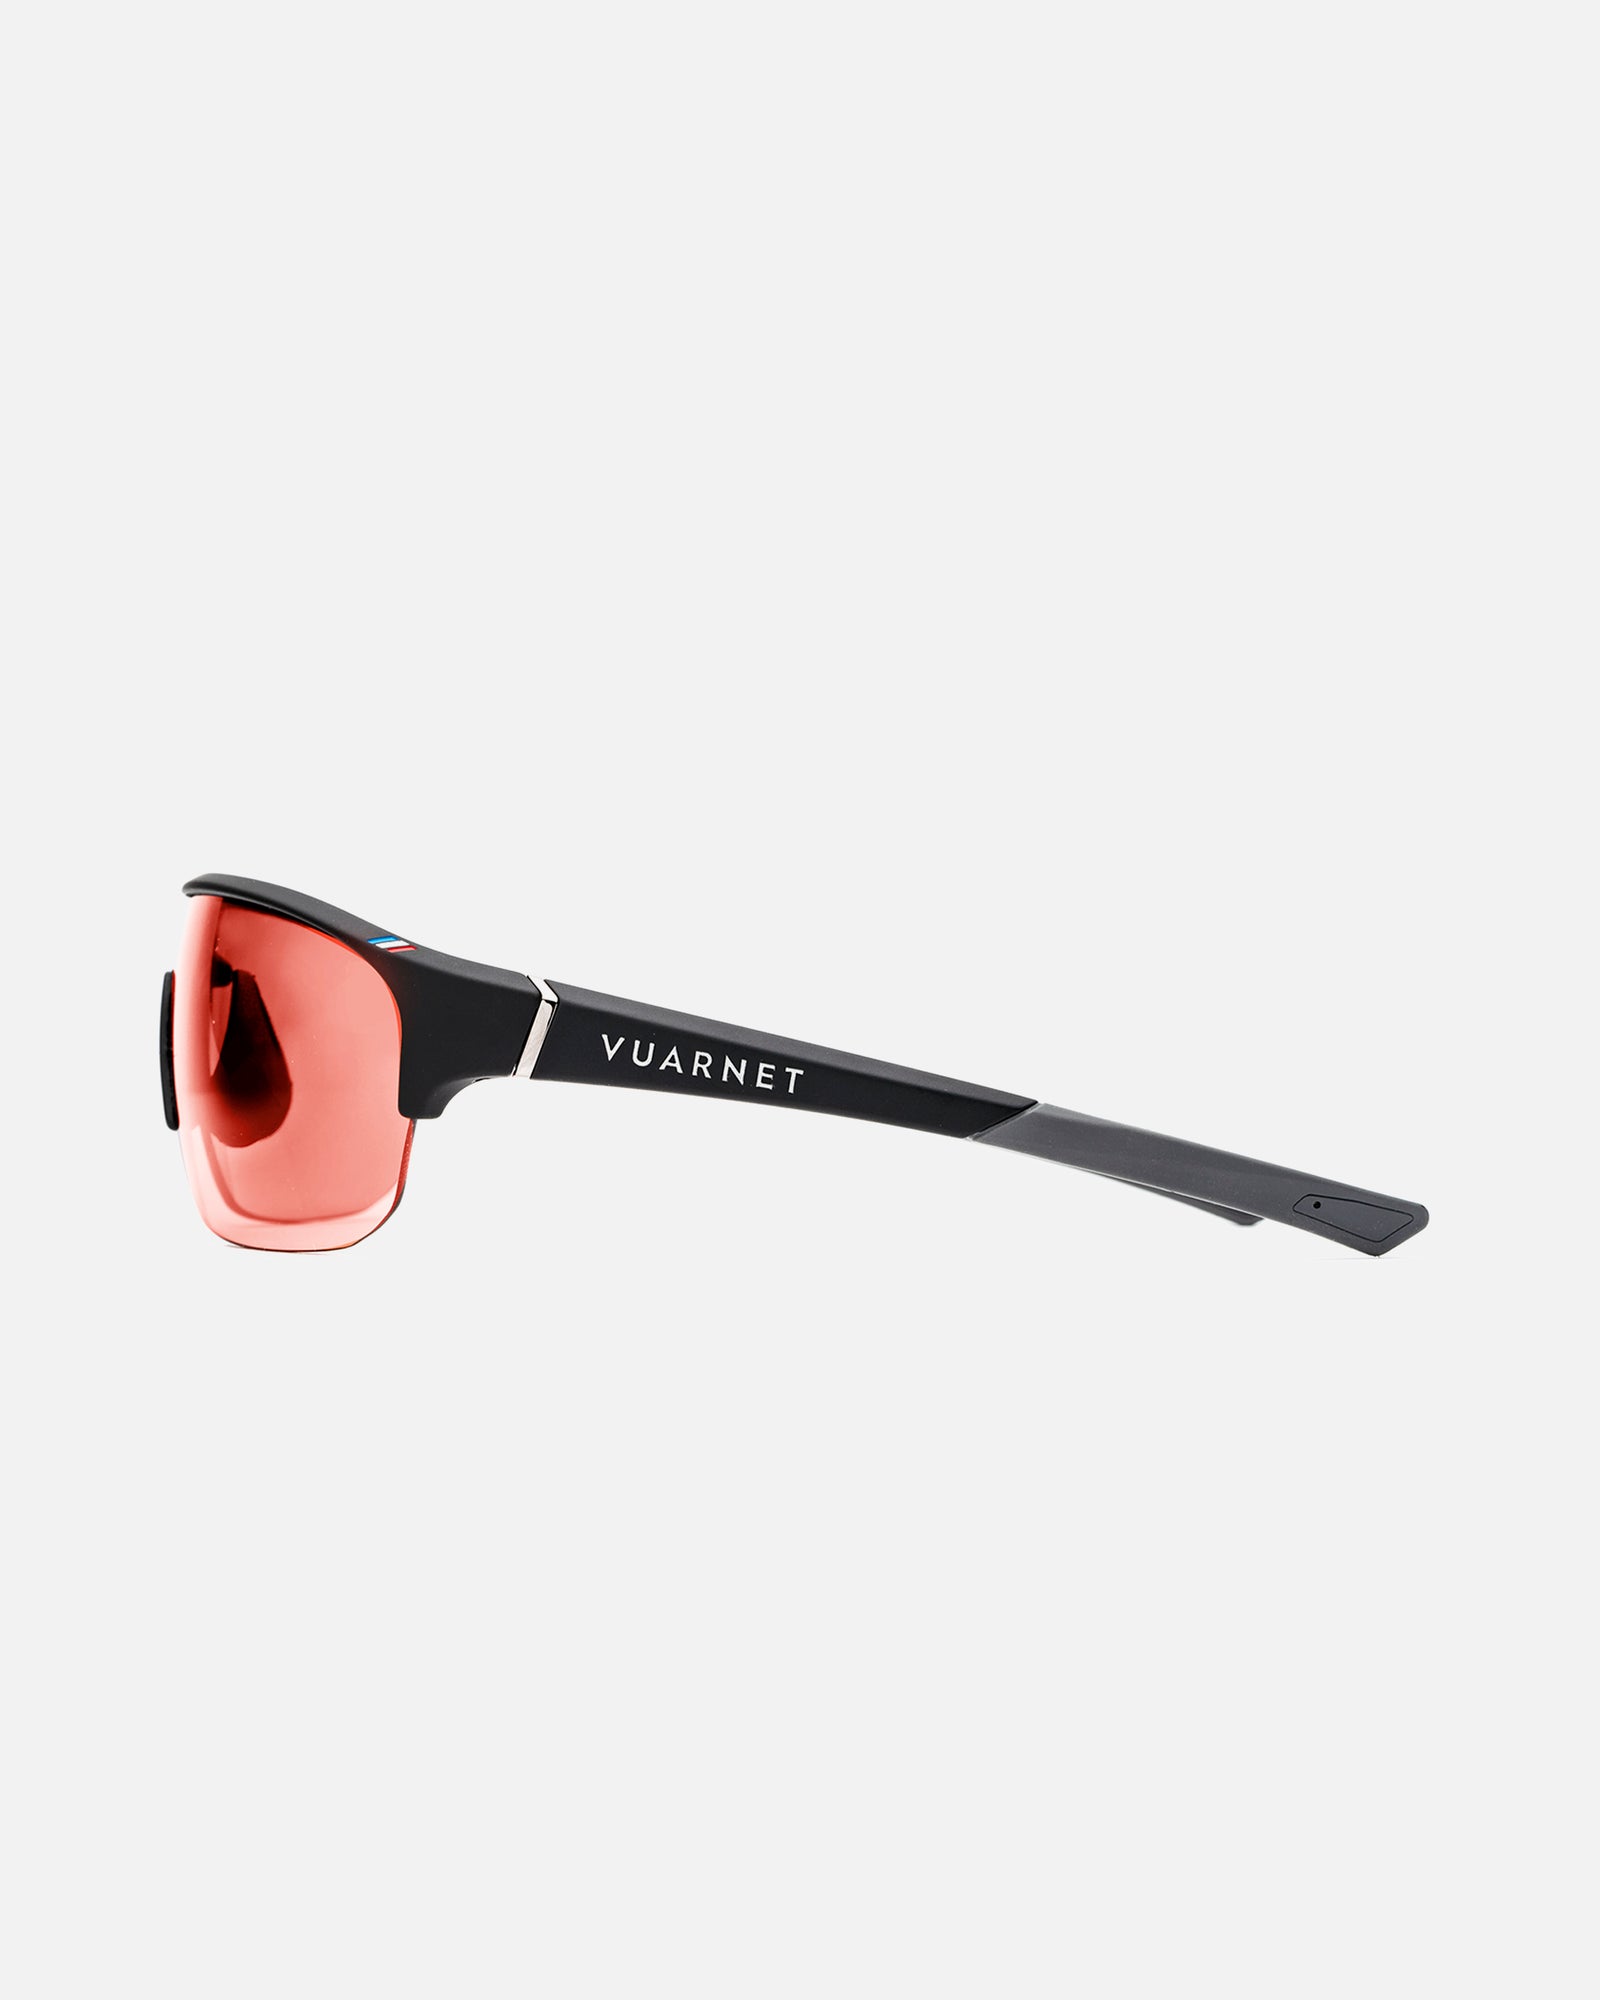 Vuarnet - Plateau - Marble / HD Red Flash - Mineral Lenses Sunglasses